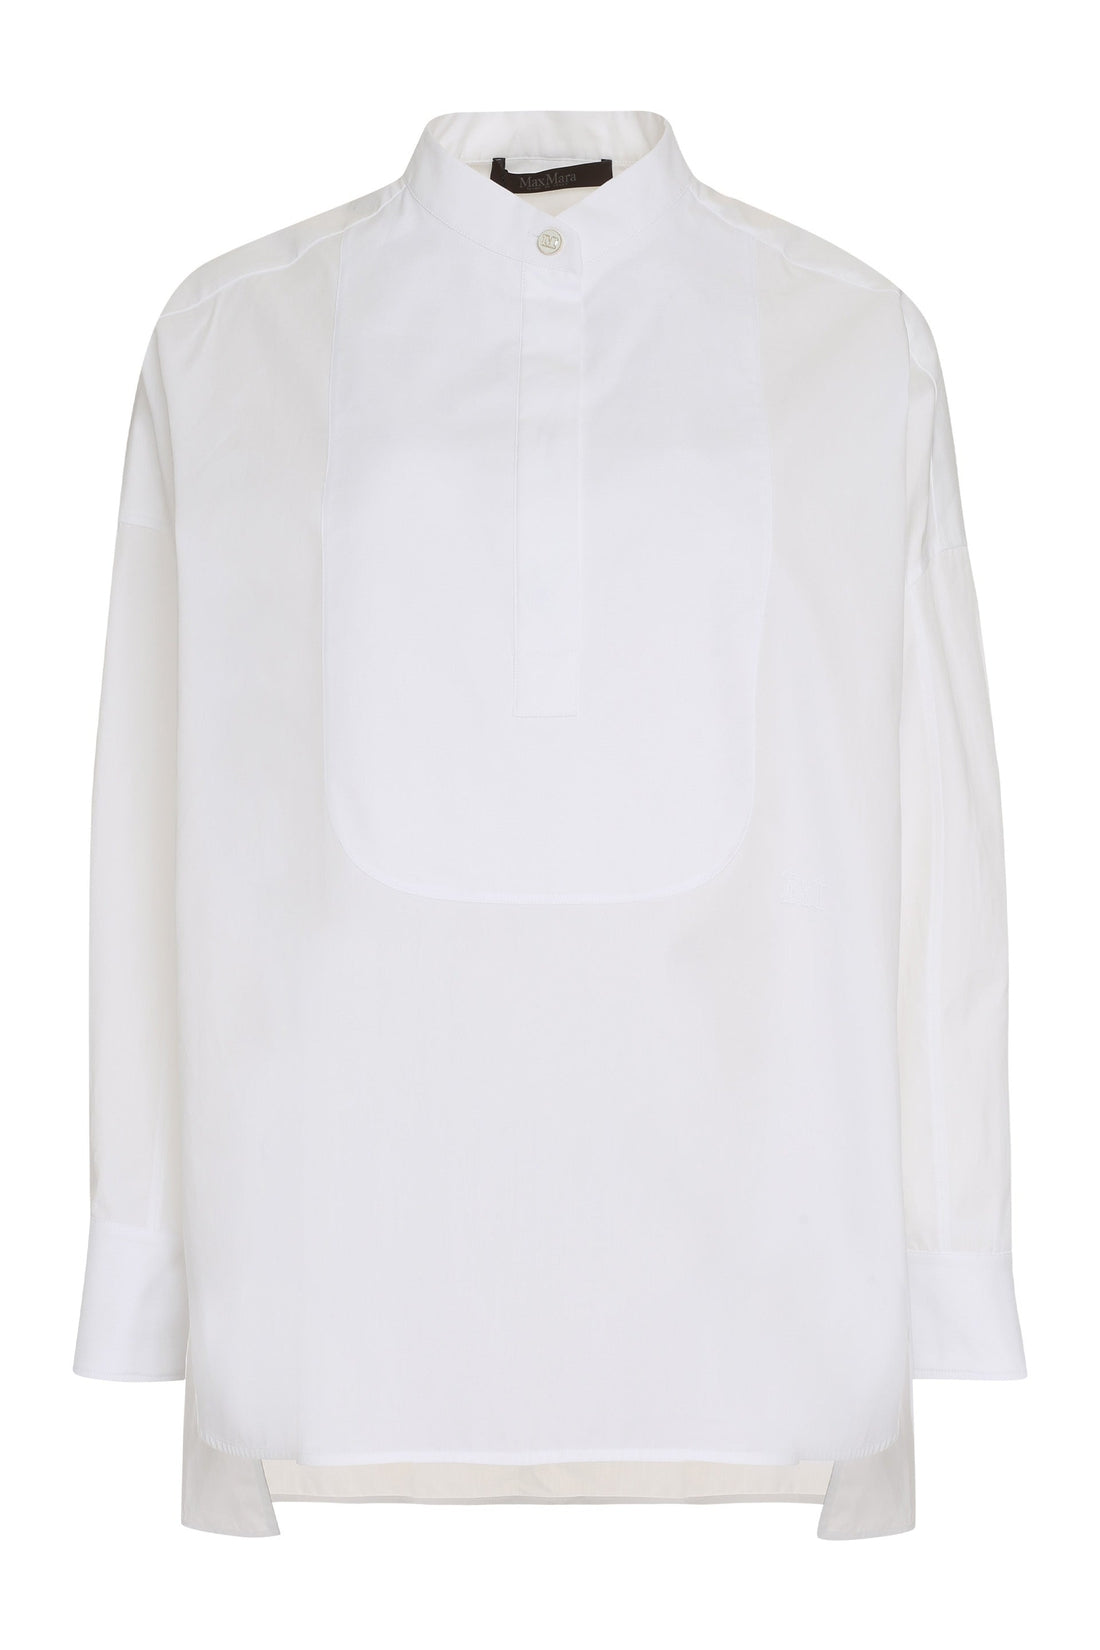 Max Mara-OUTLET-SALE-Fauna cotton shirt-ARCHIVIST